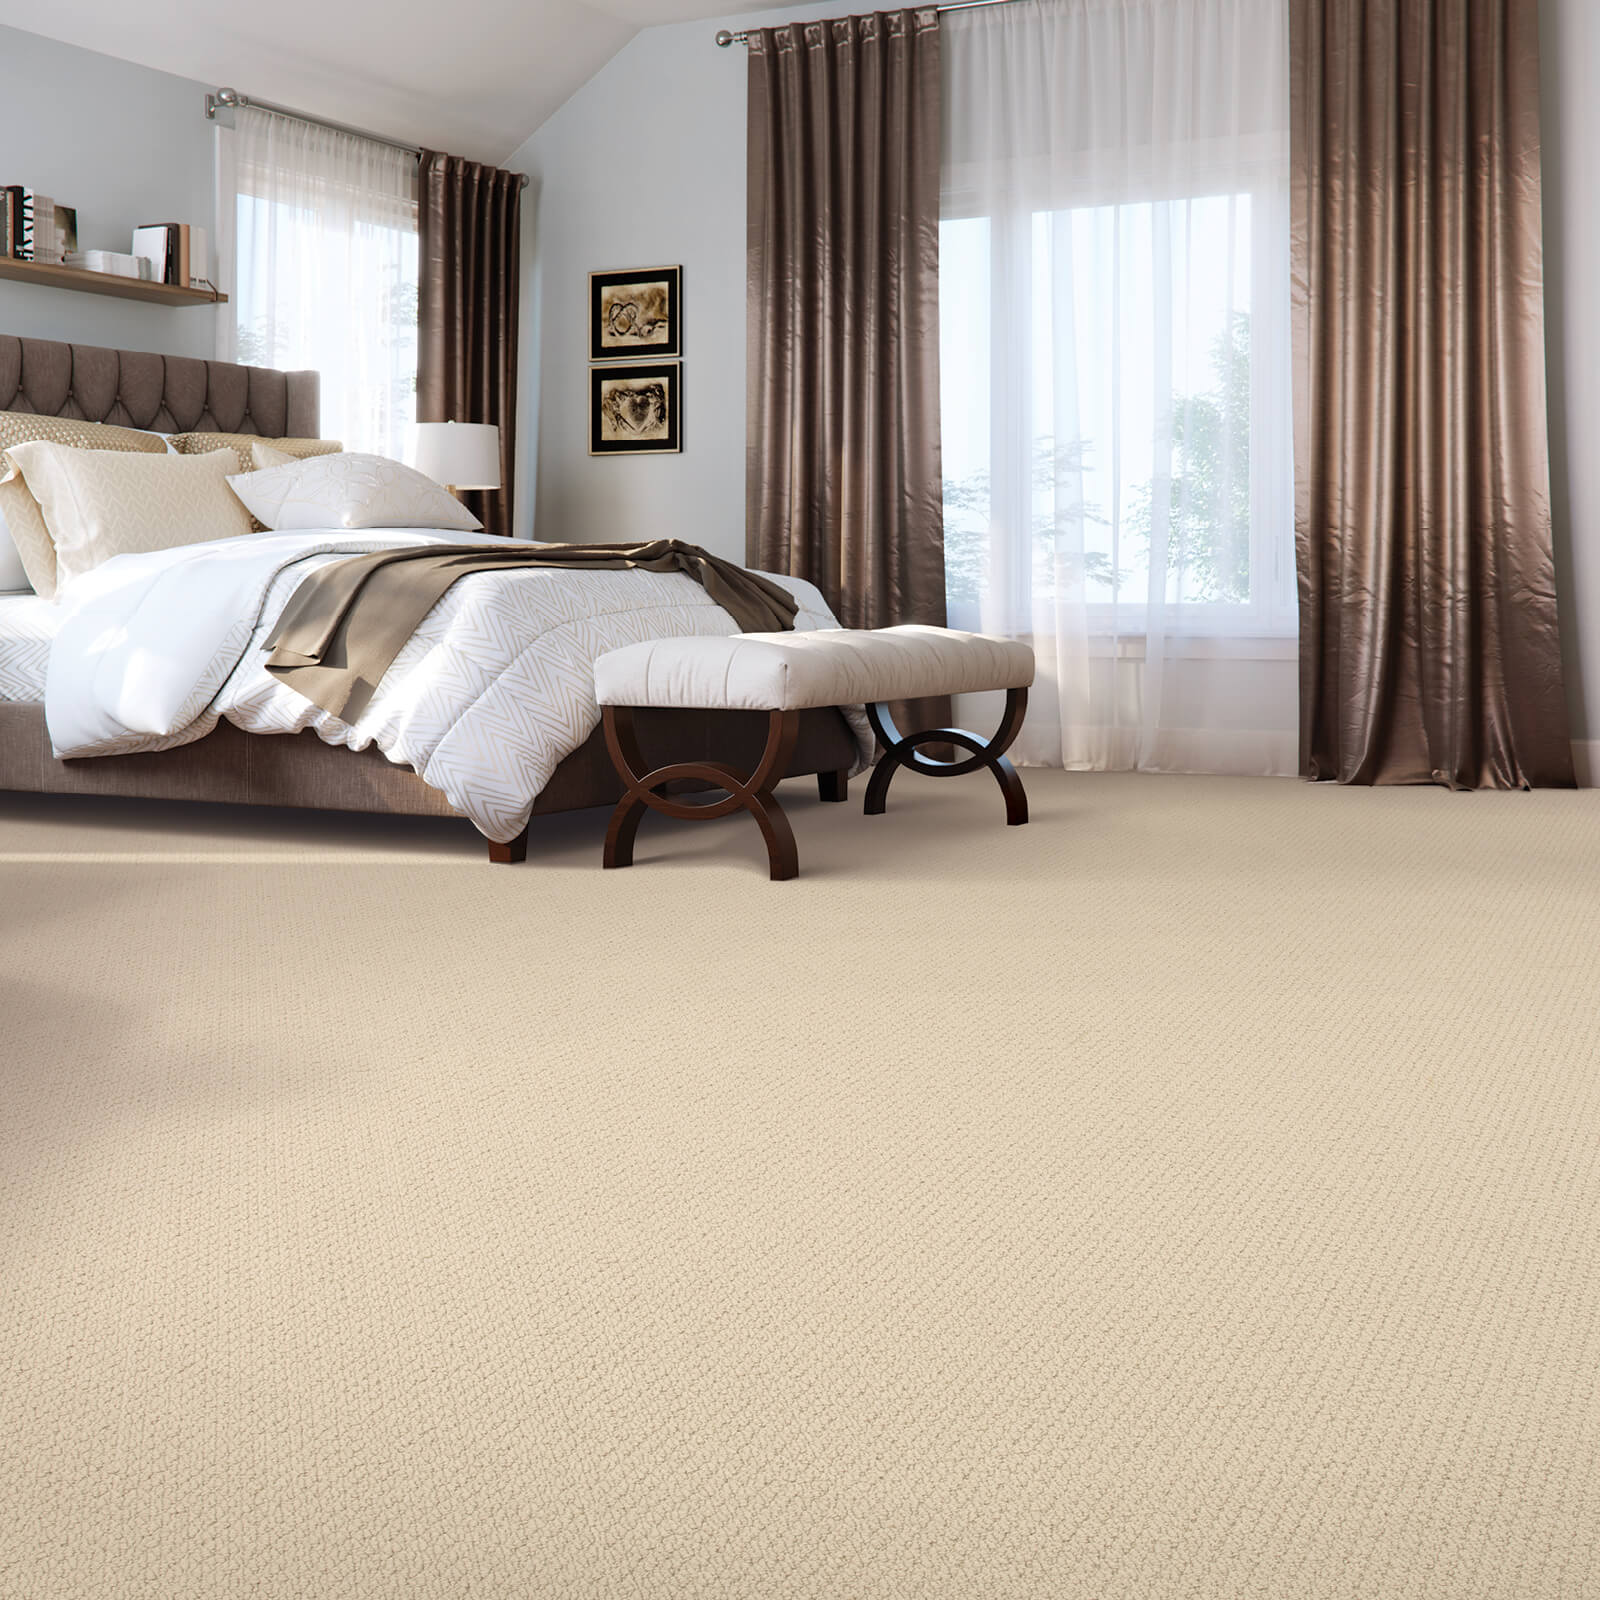 Pet-Friendly Flooring Choices | Staff Carpet